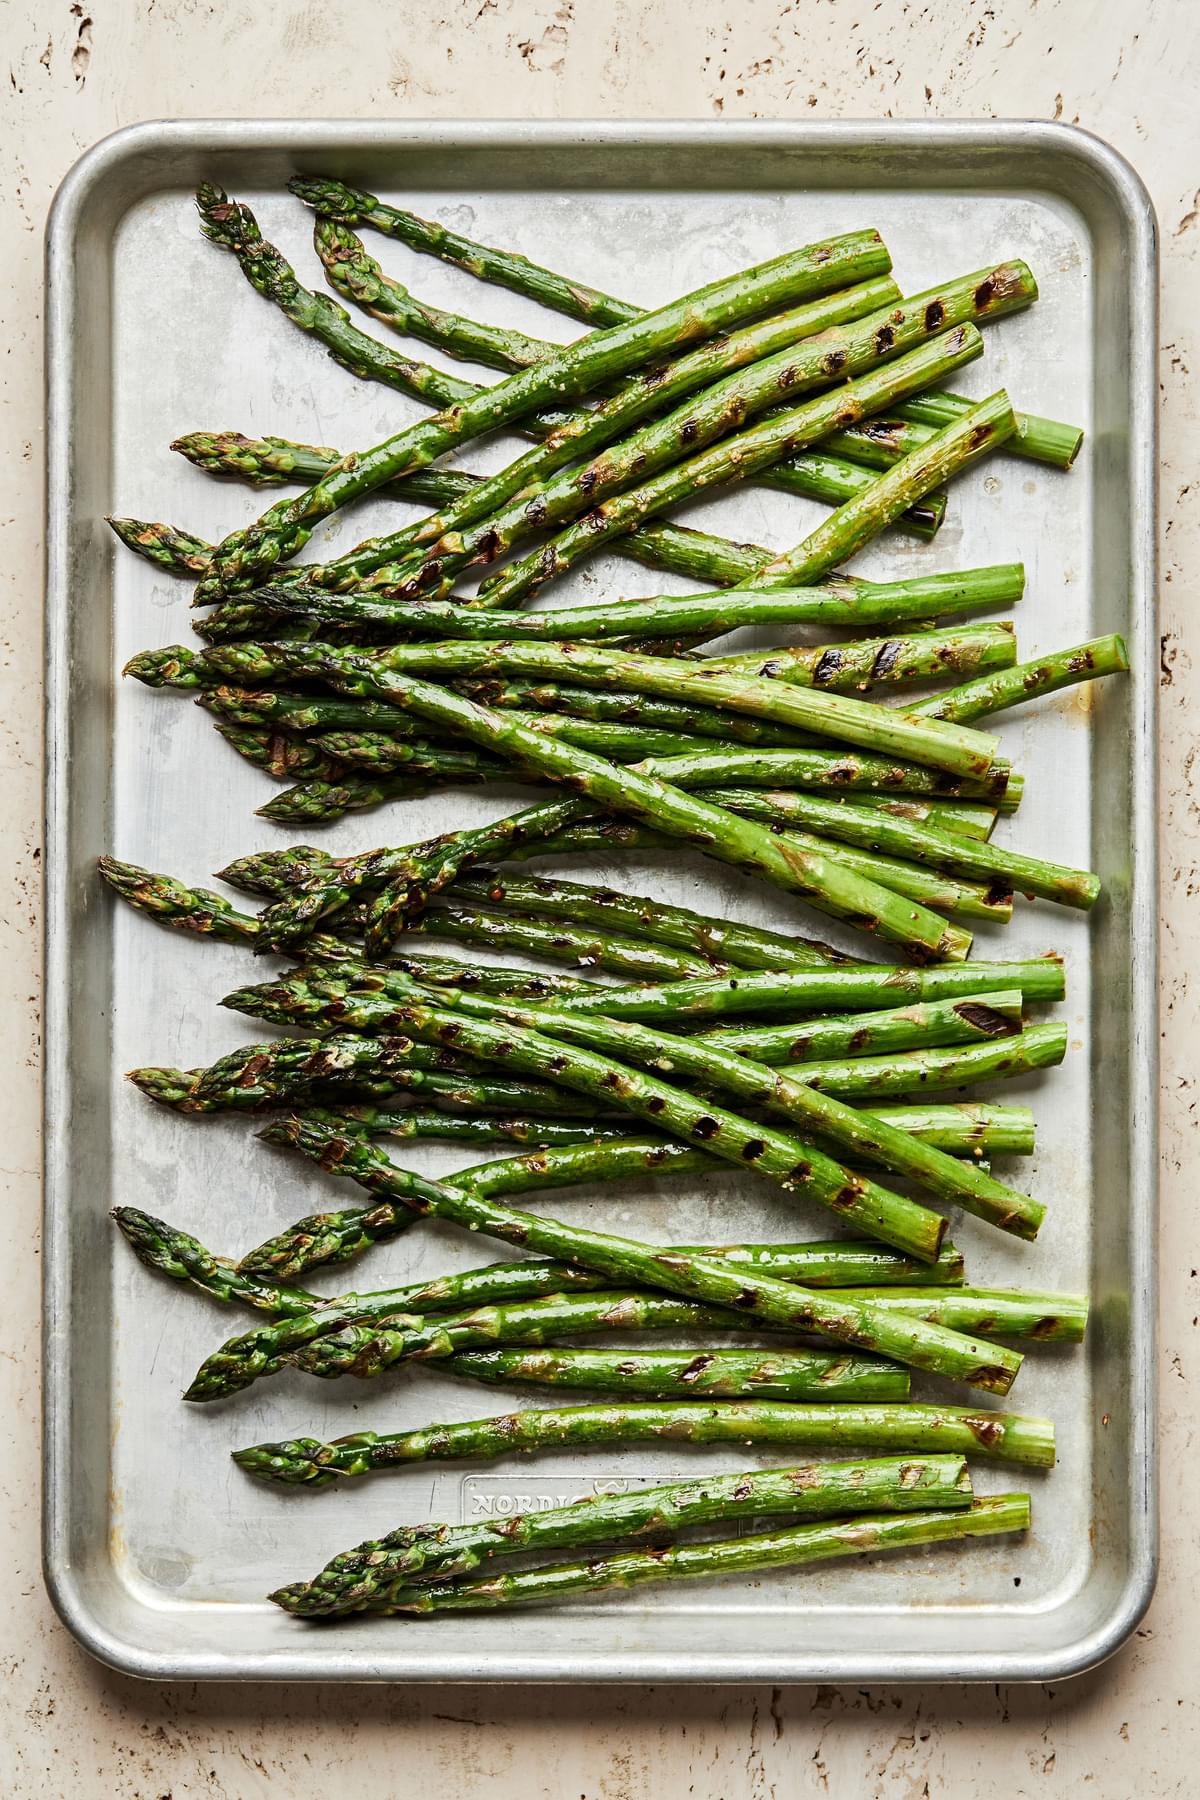 grilled asparagus seasoned with olive oil, salt & pepper resting on a baking sheet